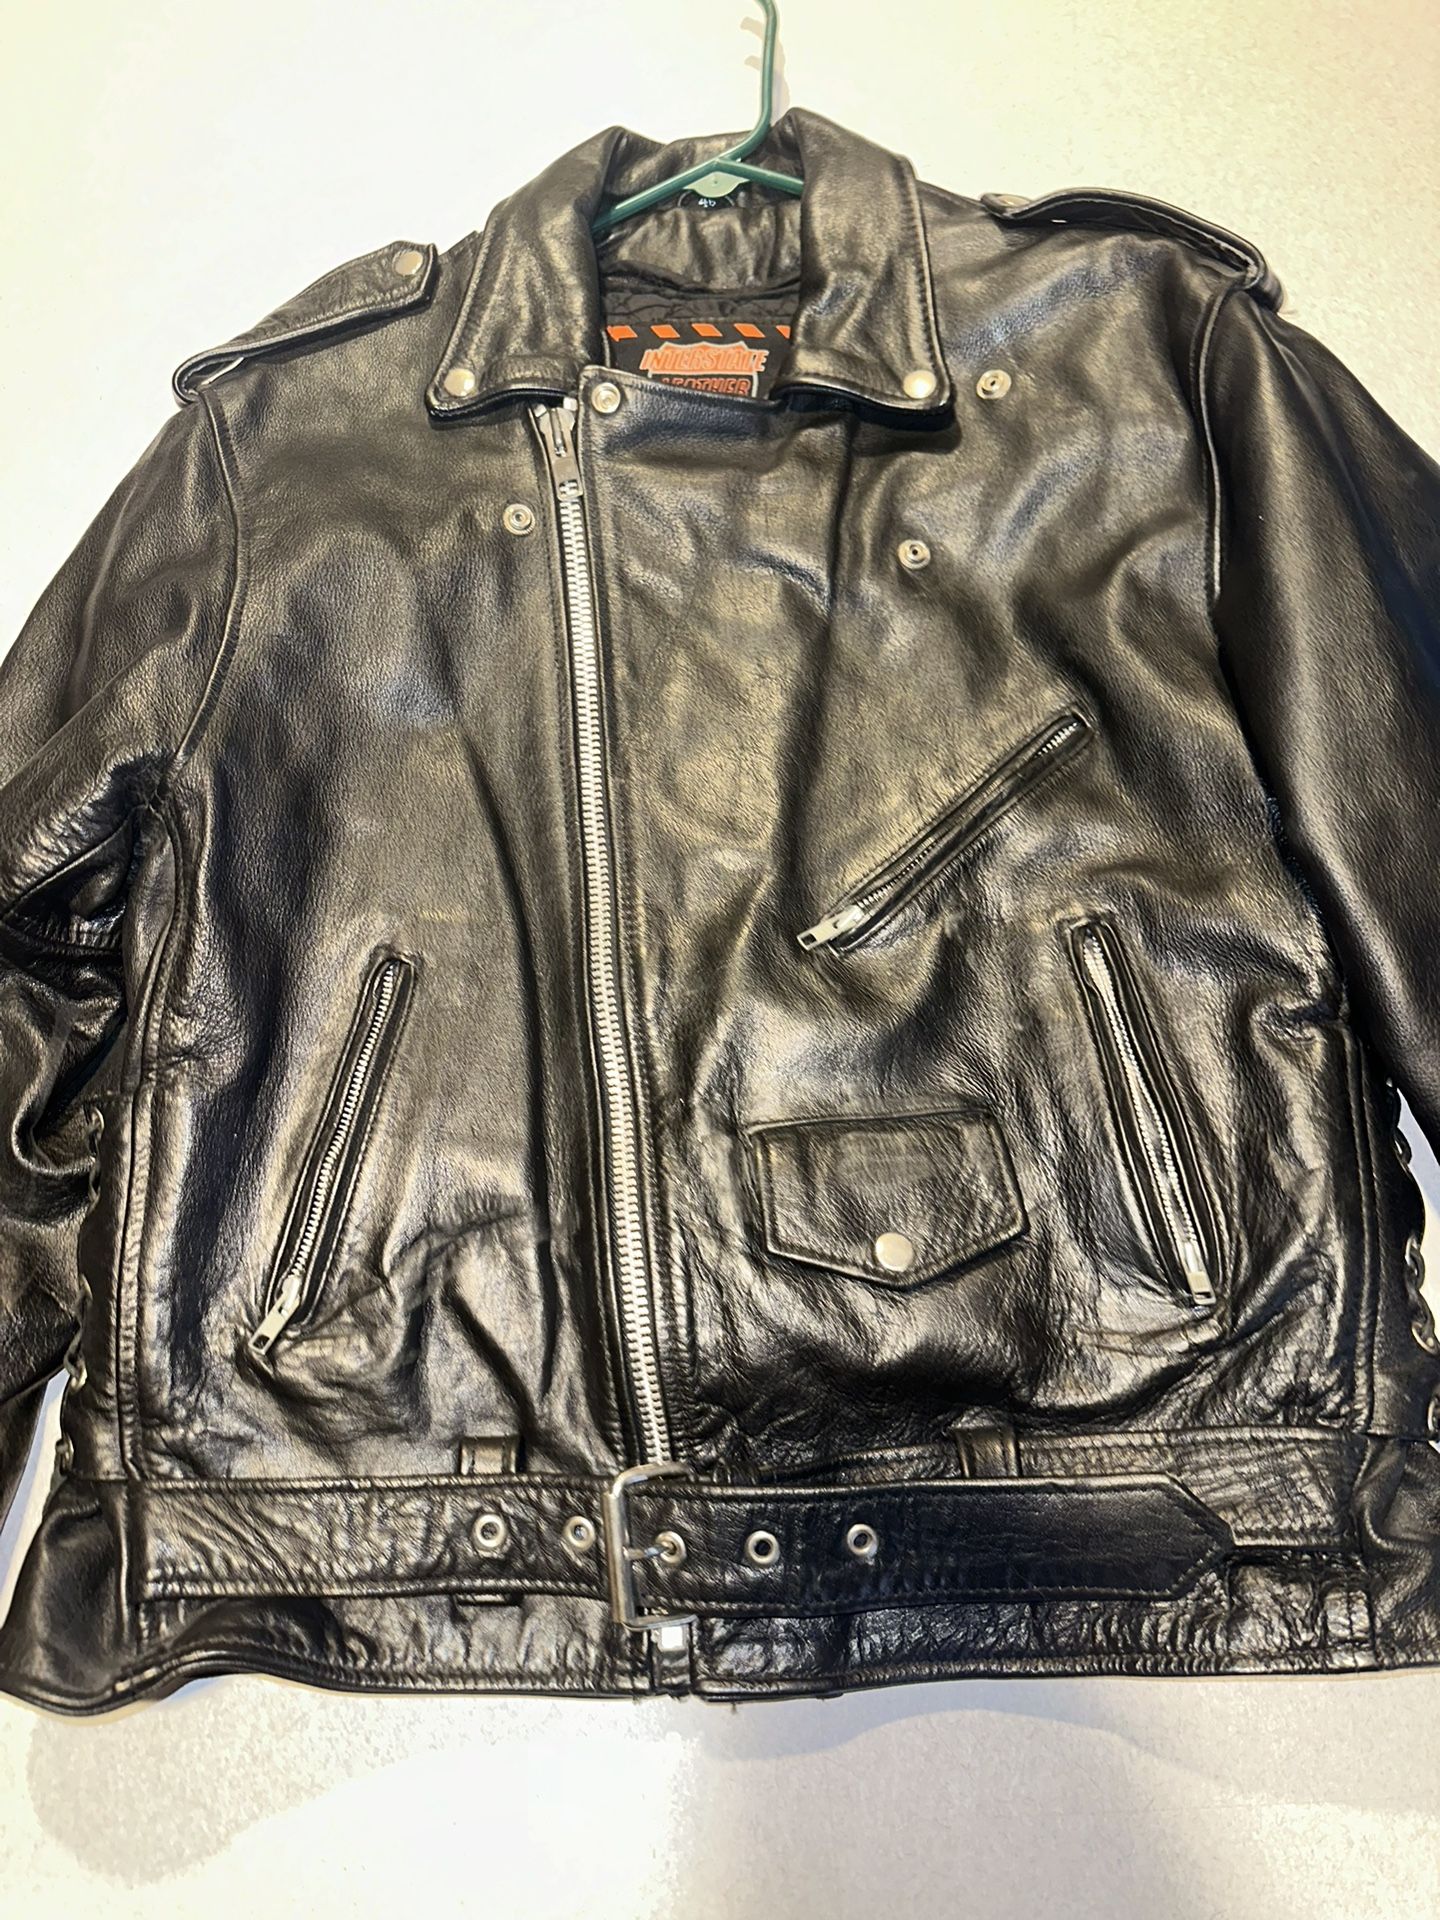 Interstate Classic Leather Originals Women's Medium Jacket And Pants